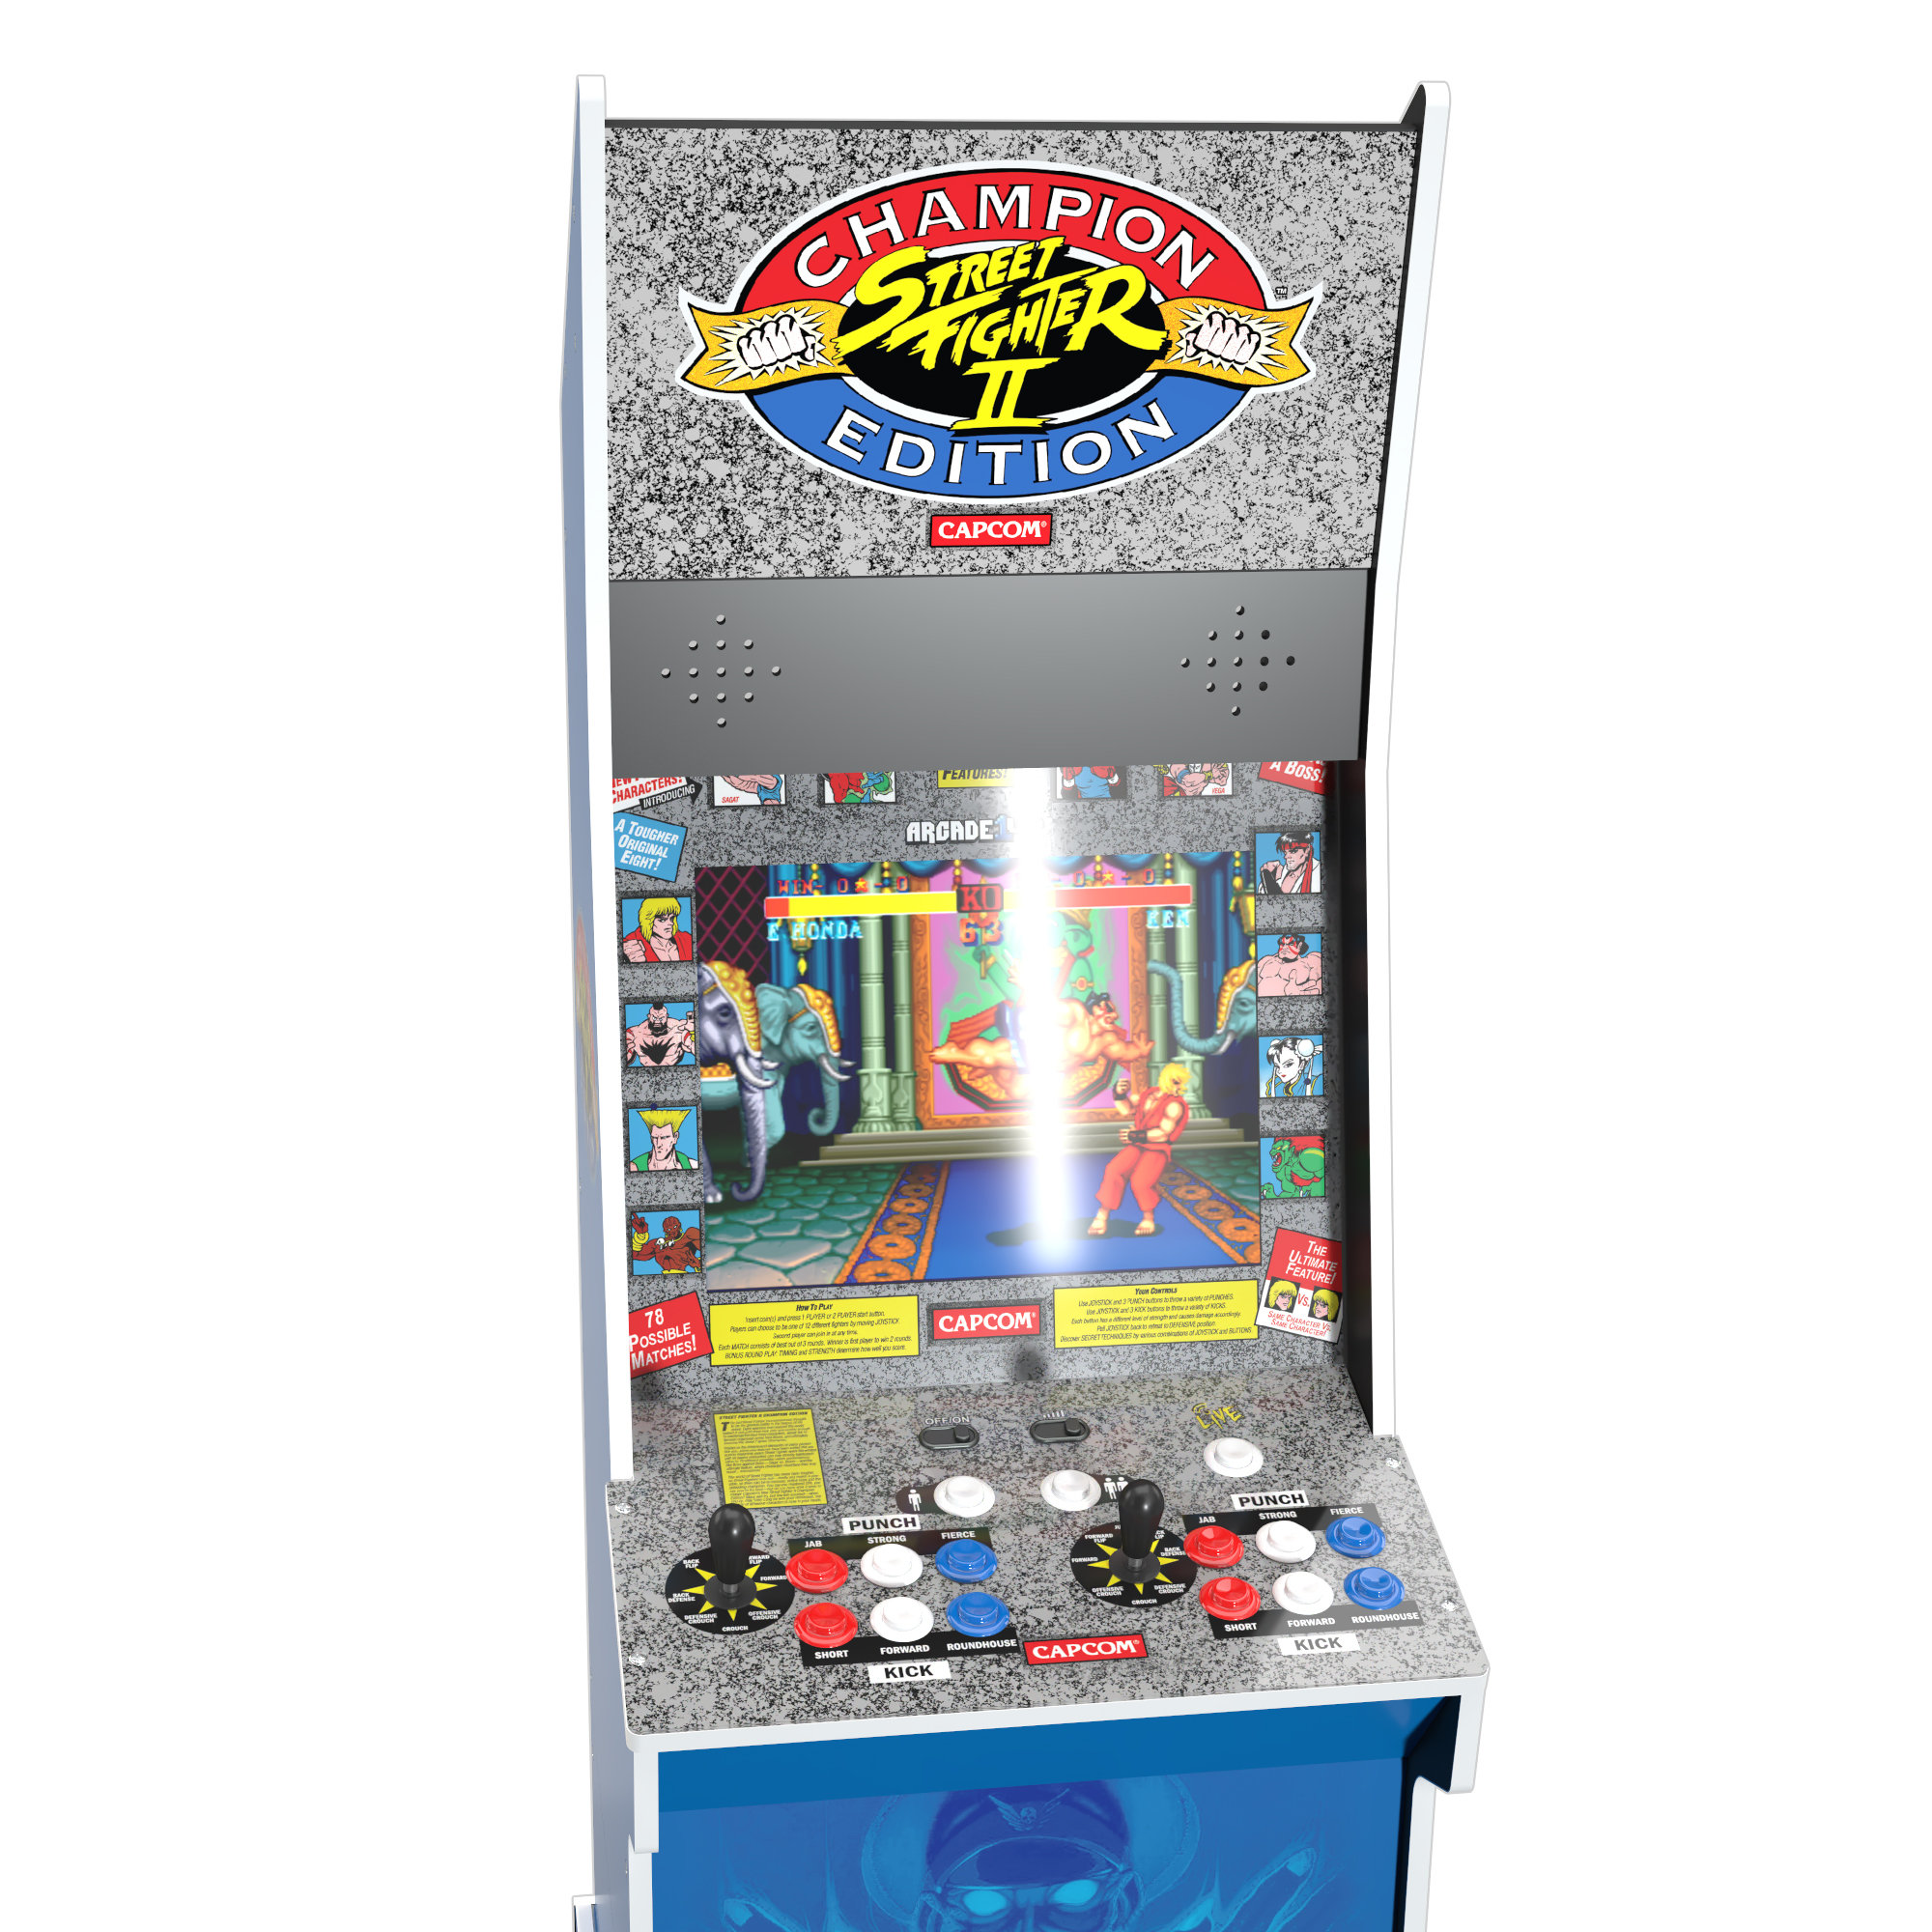 Capcom Legacy 35th Anniversary Arcade Game14-n-1 Shinku Hadoken